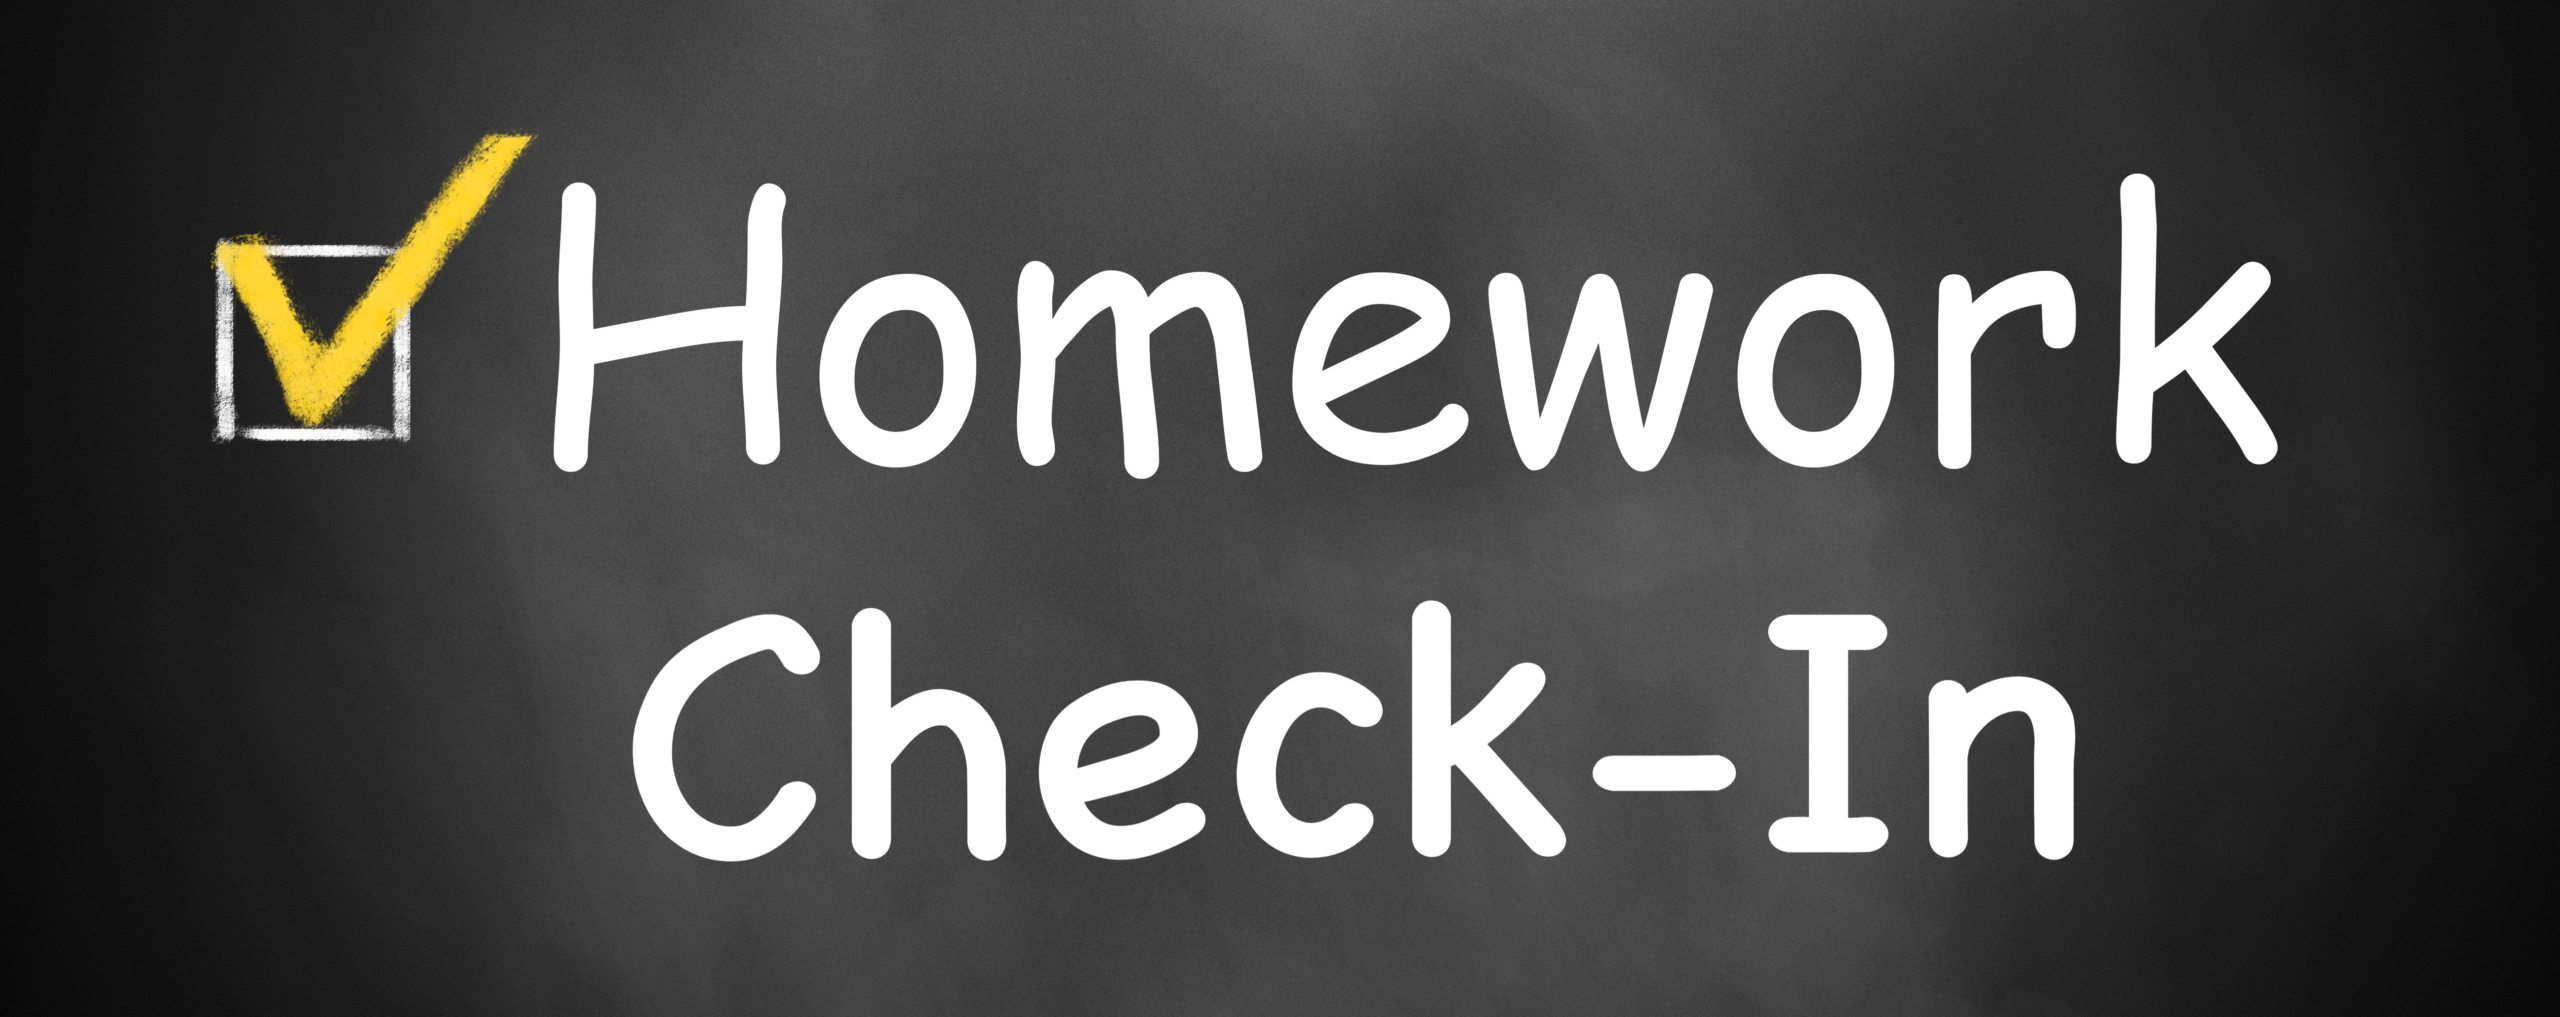 homework check online